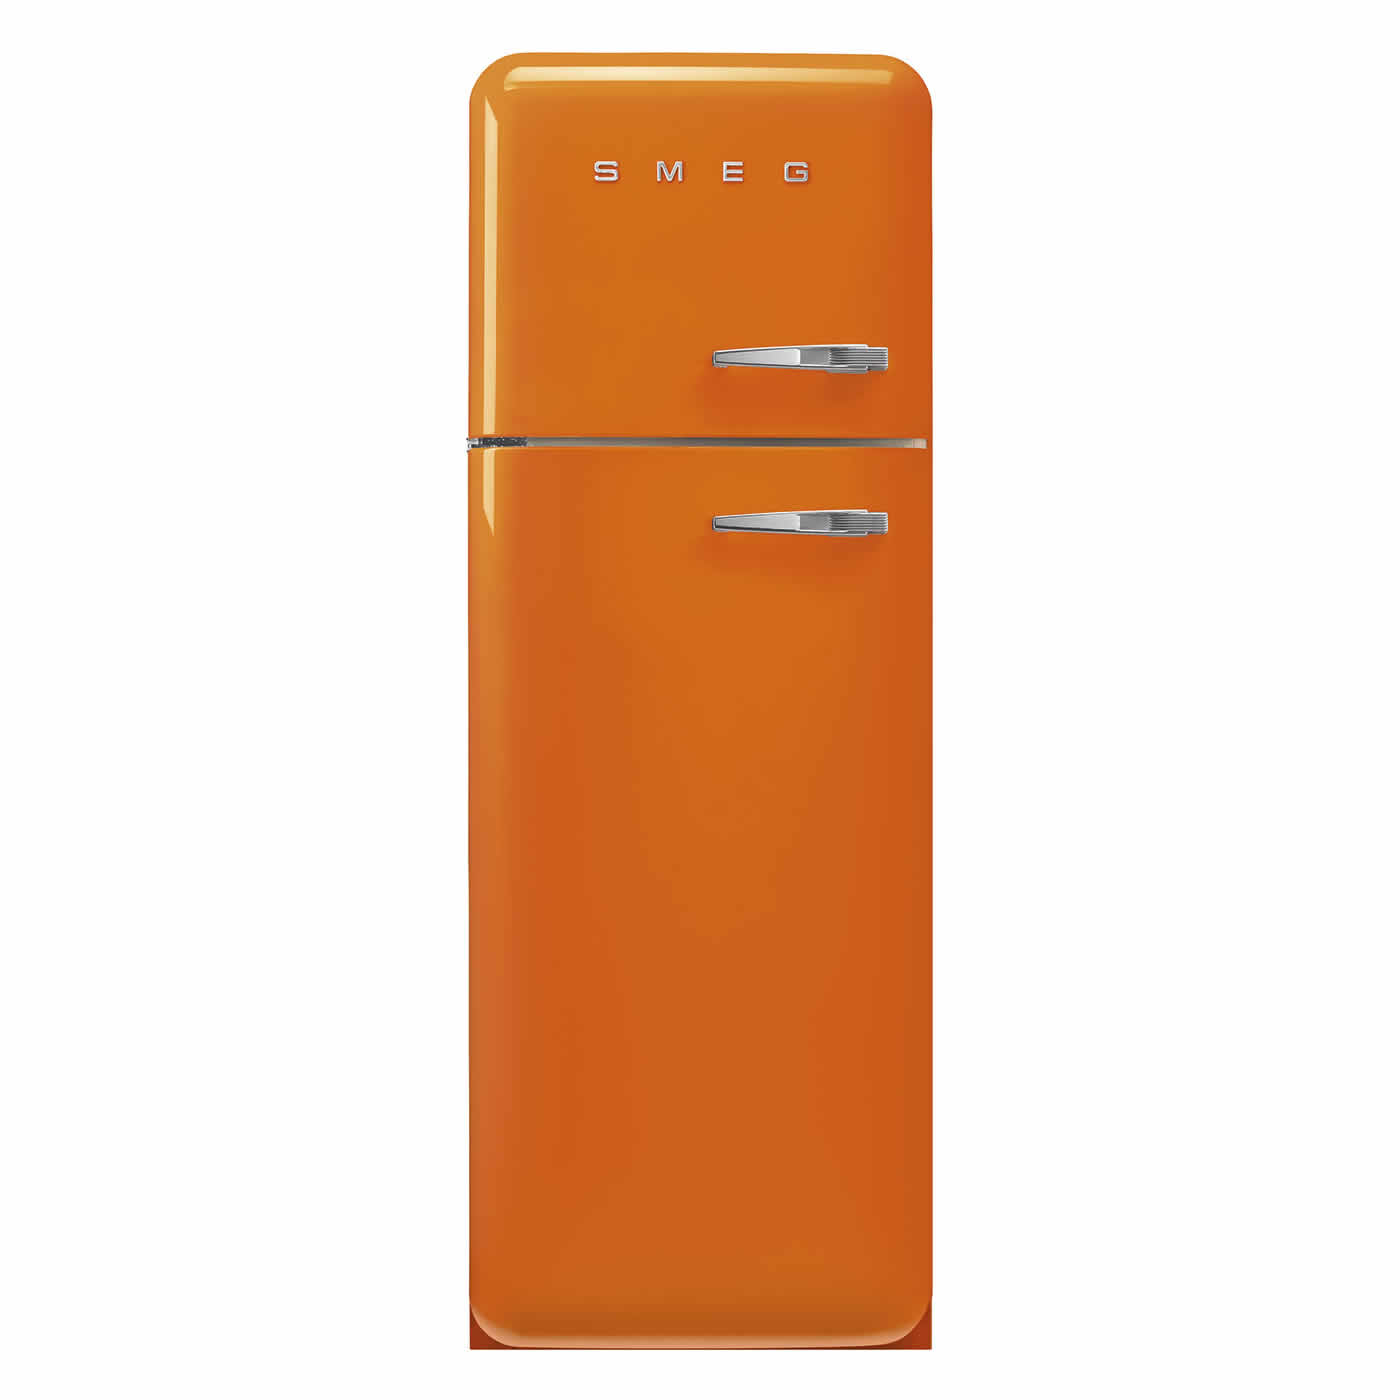 Smeg 294litre 1950s Retro Style Fridge Freezer Orange